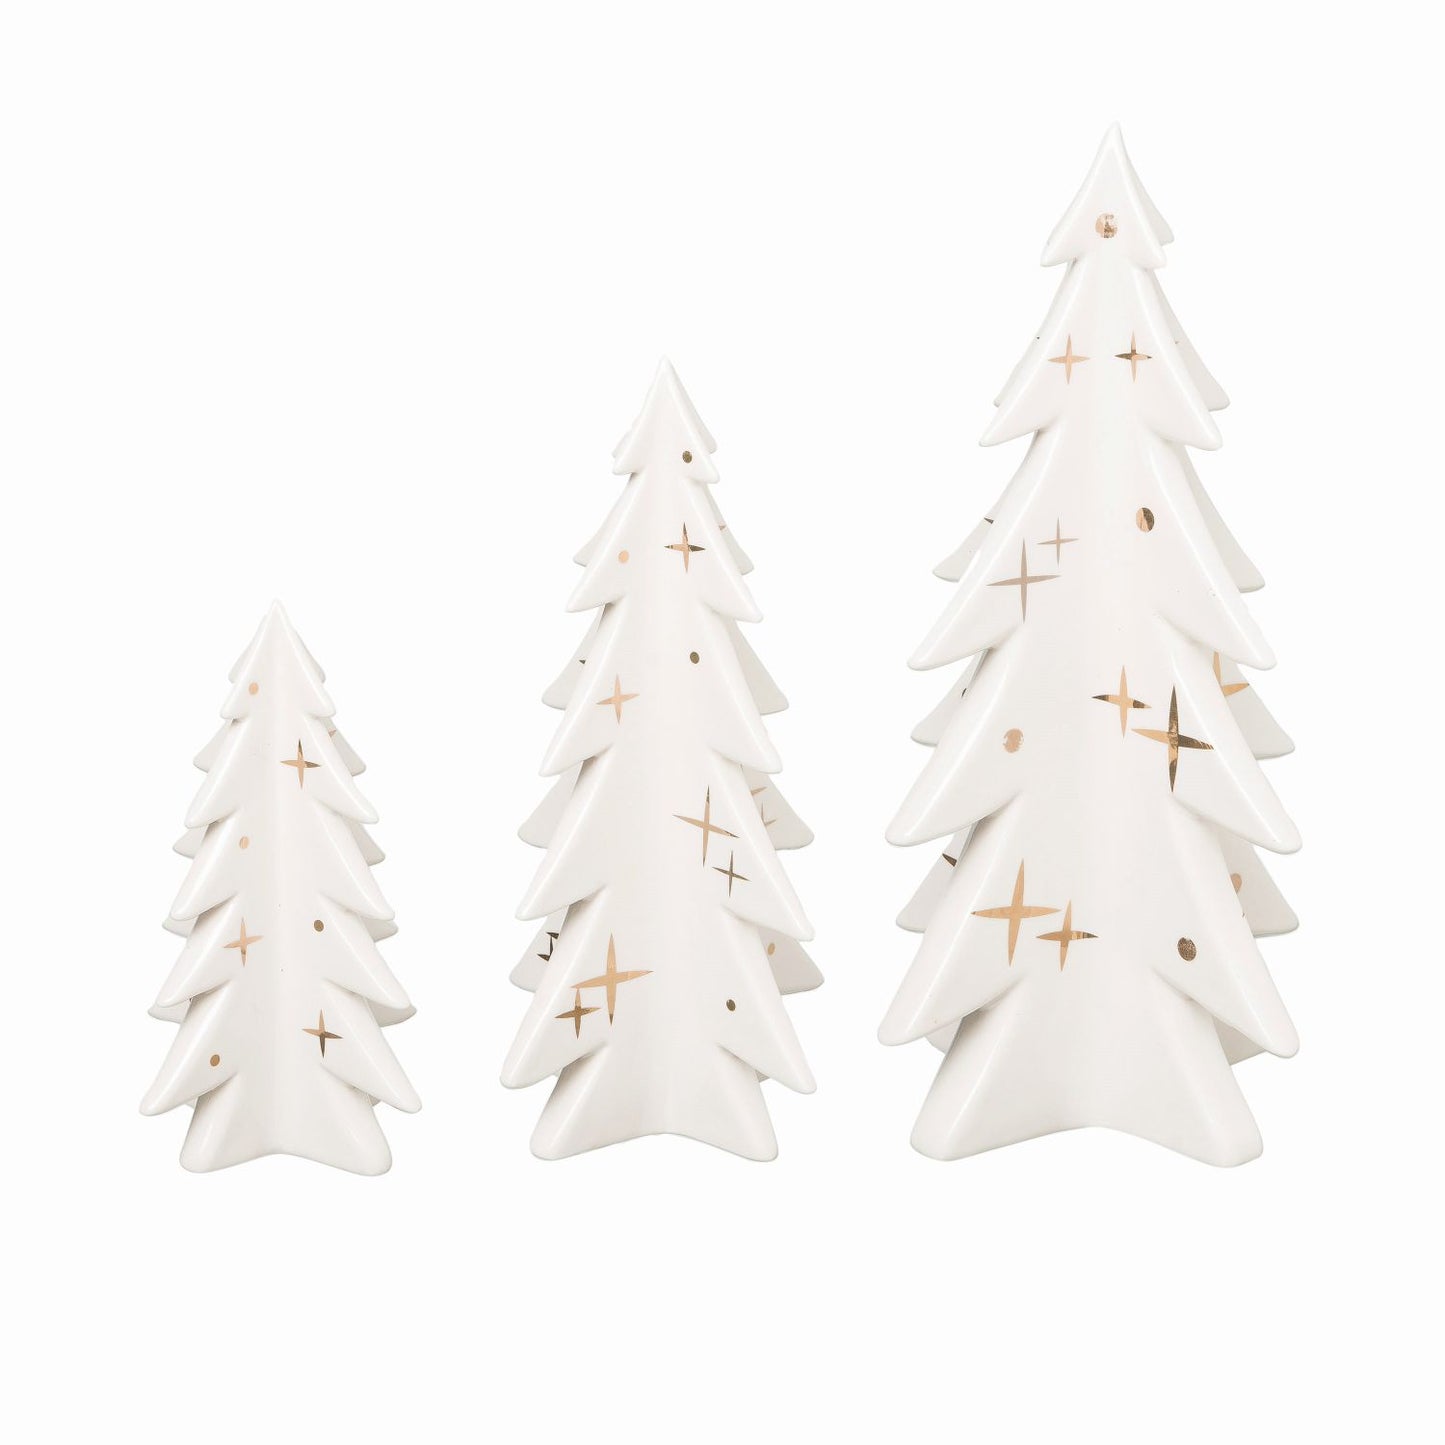 Transpac Dolomite Christmas Trees, Set Of 3